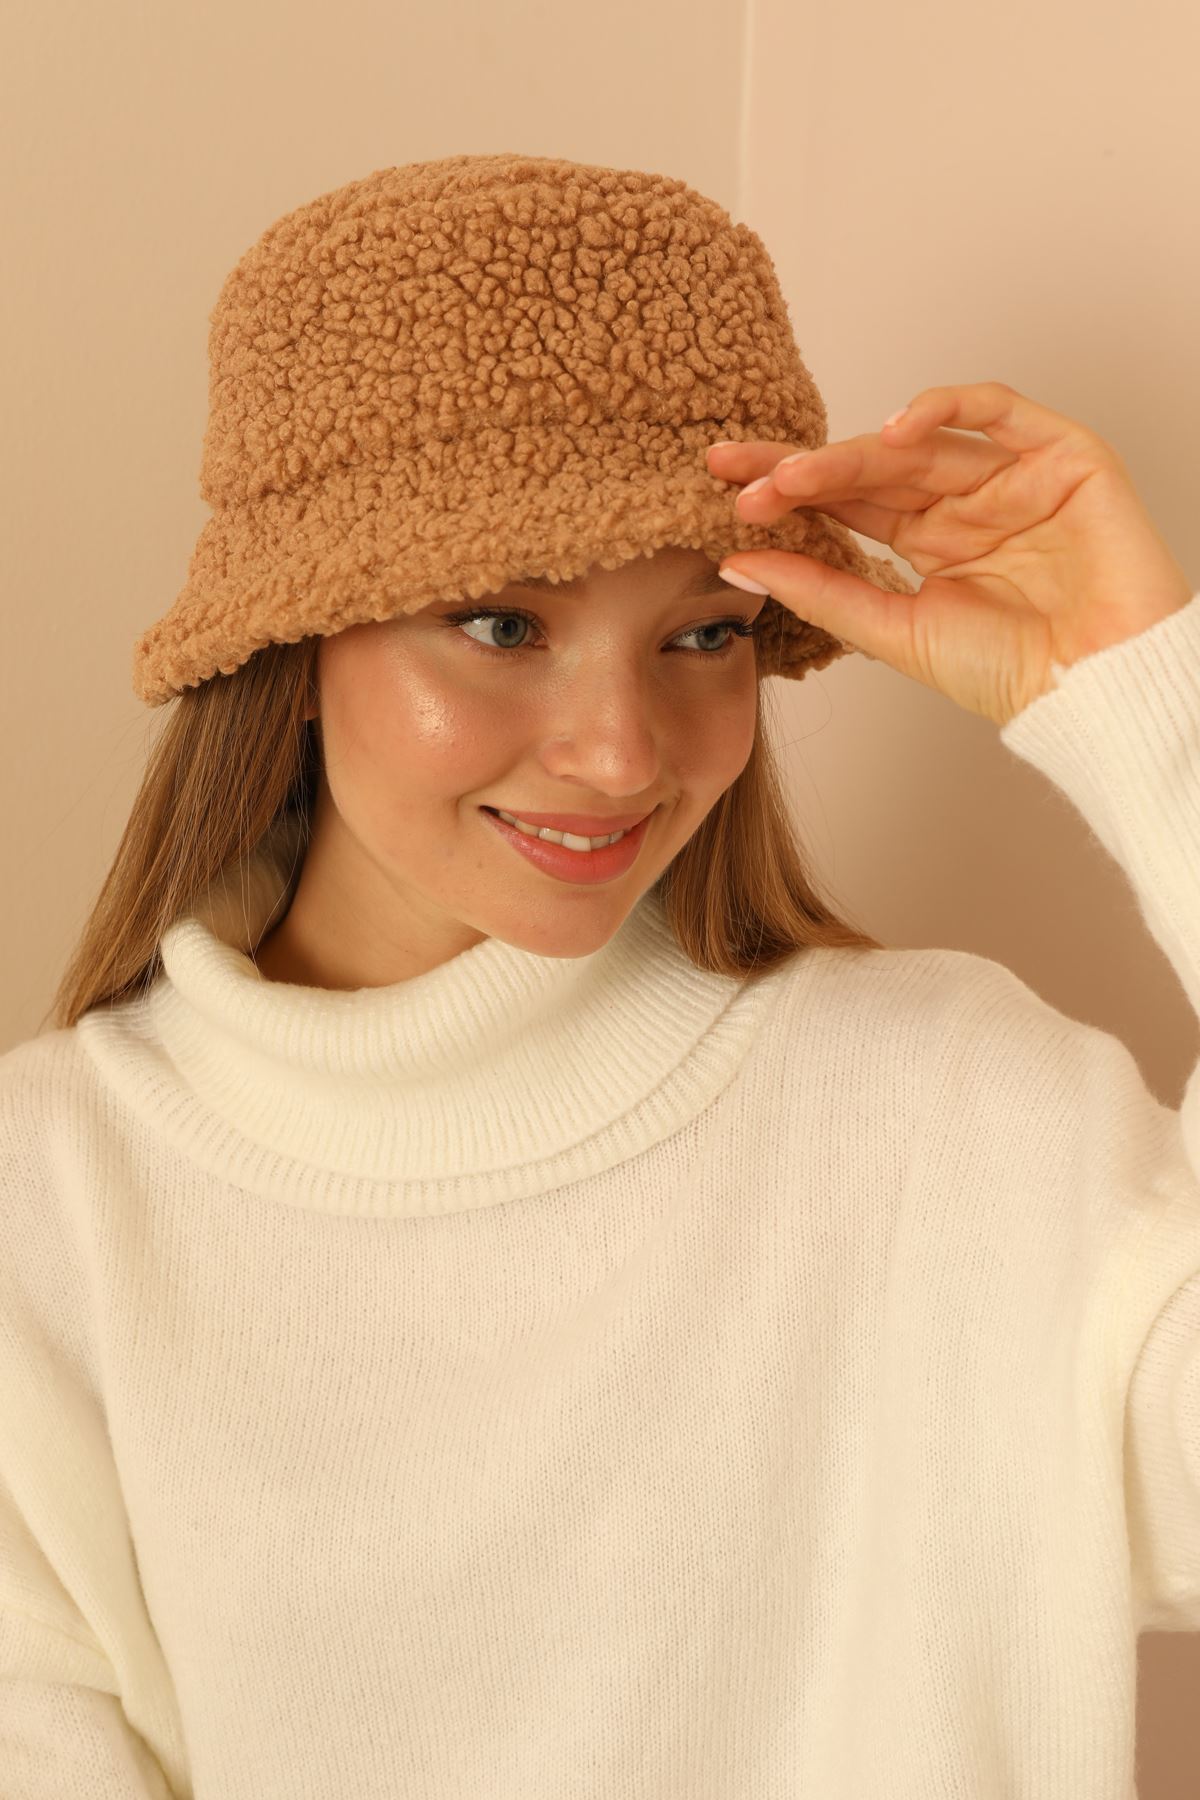 A model wears KAM11476 - Curly Bucket Women's Hat - Camel, wholesale Hat of Kaktus Moda to display at Lonca